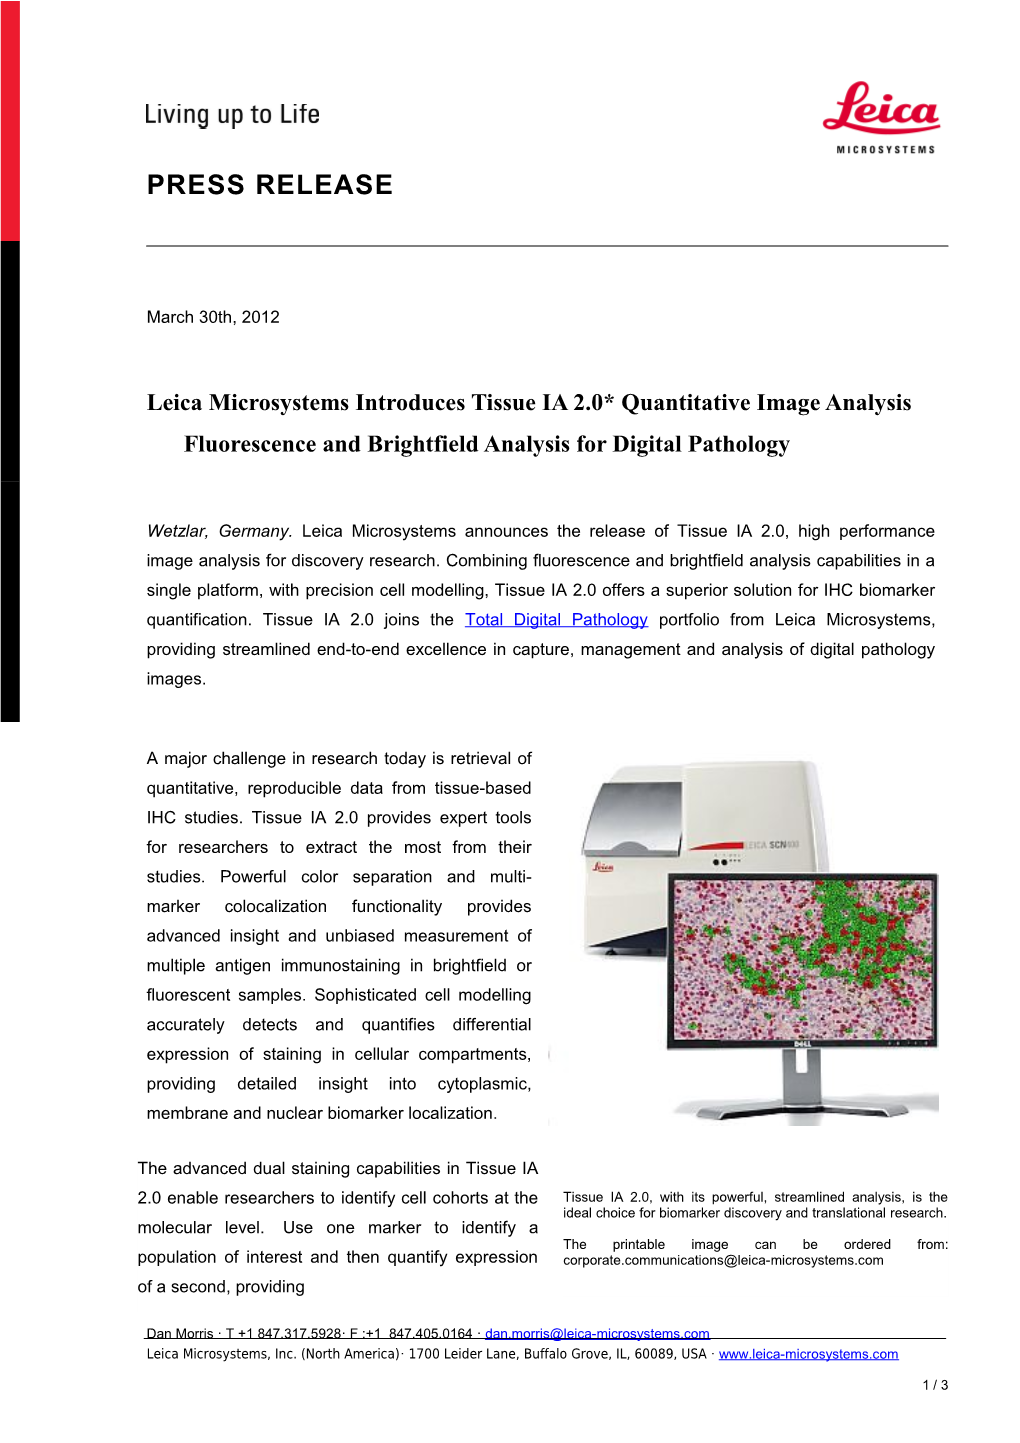 Leica Microsystems Press Release s8